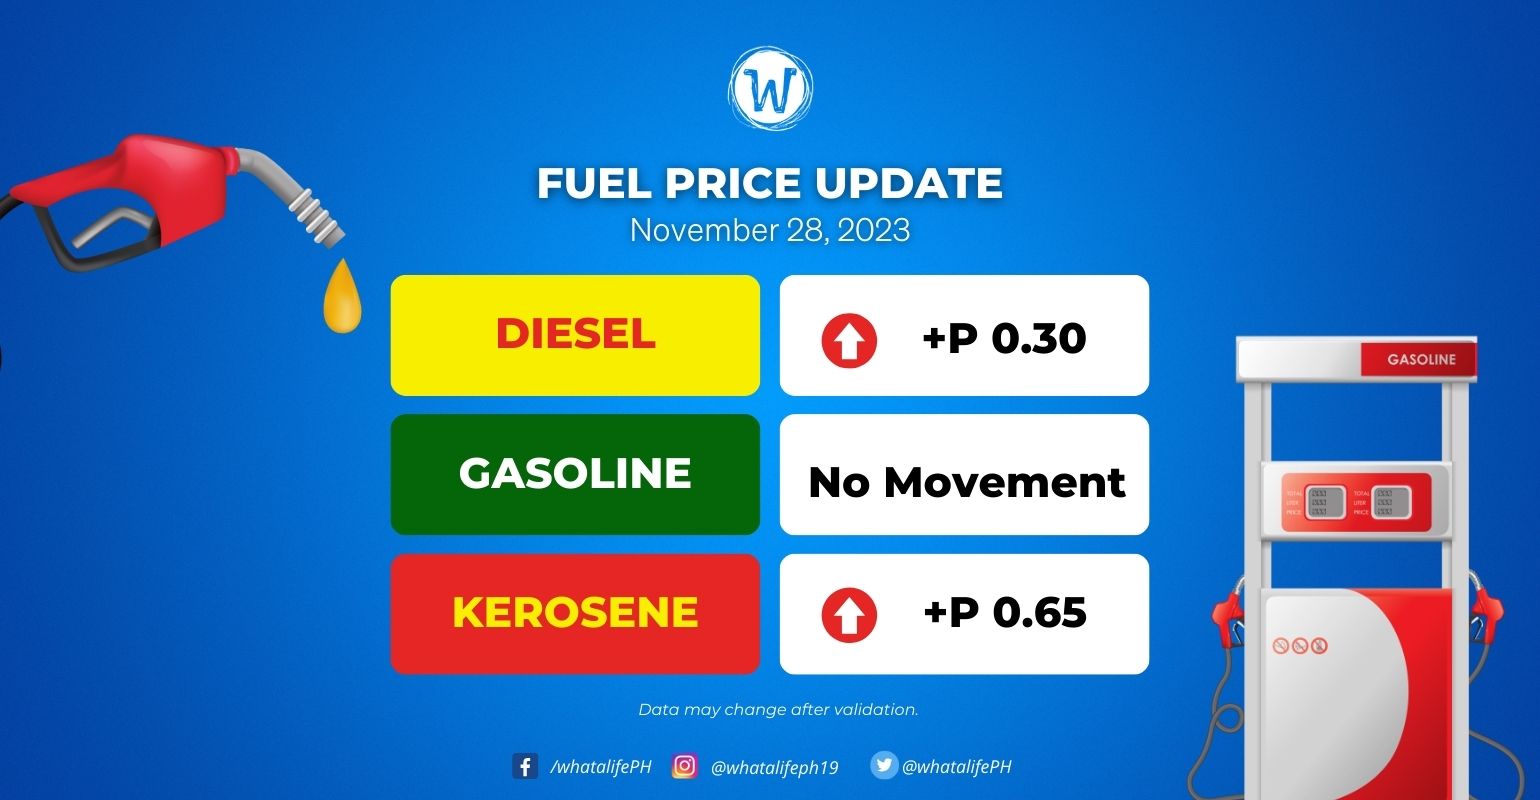 Fuel prices effective November 28, 2023